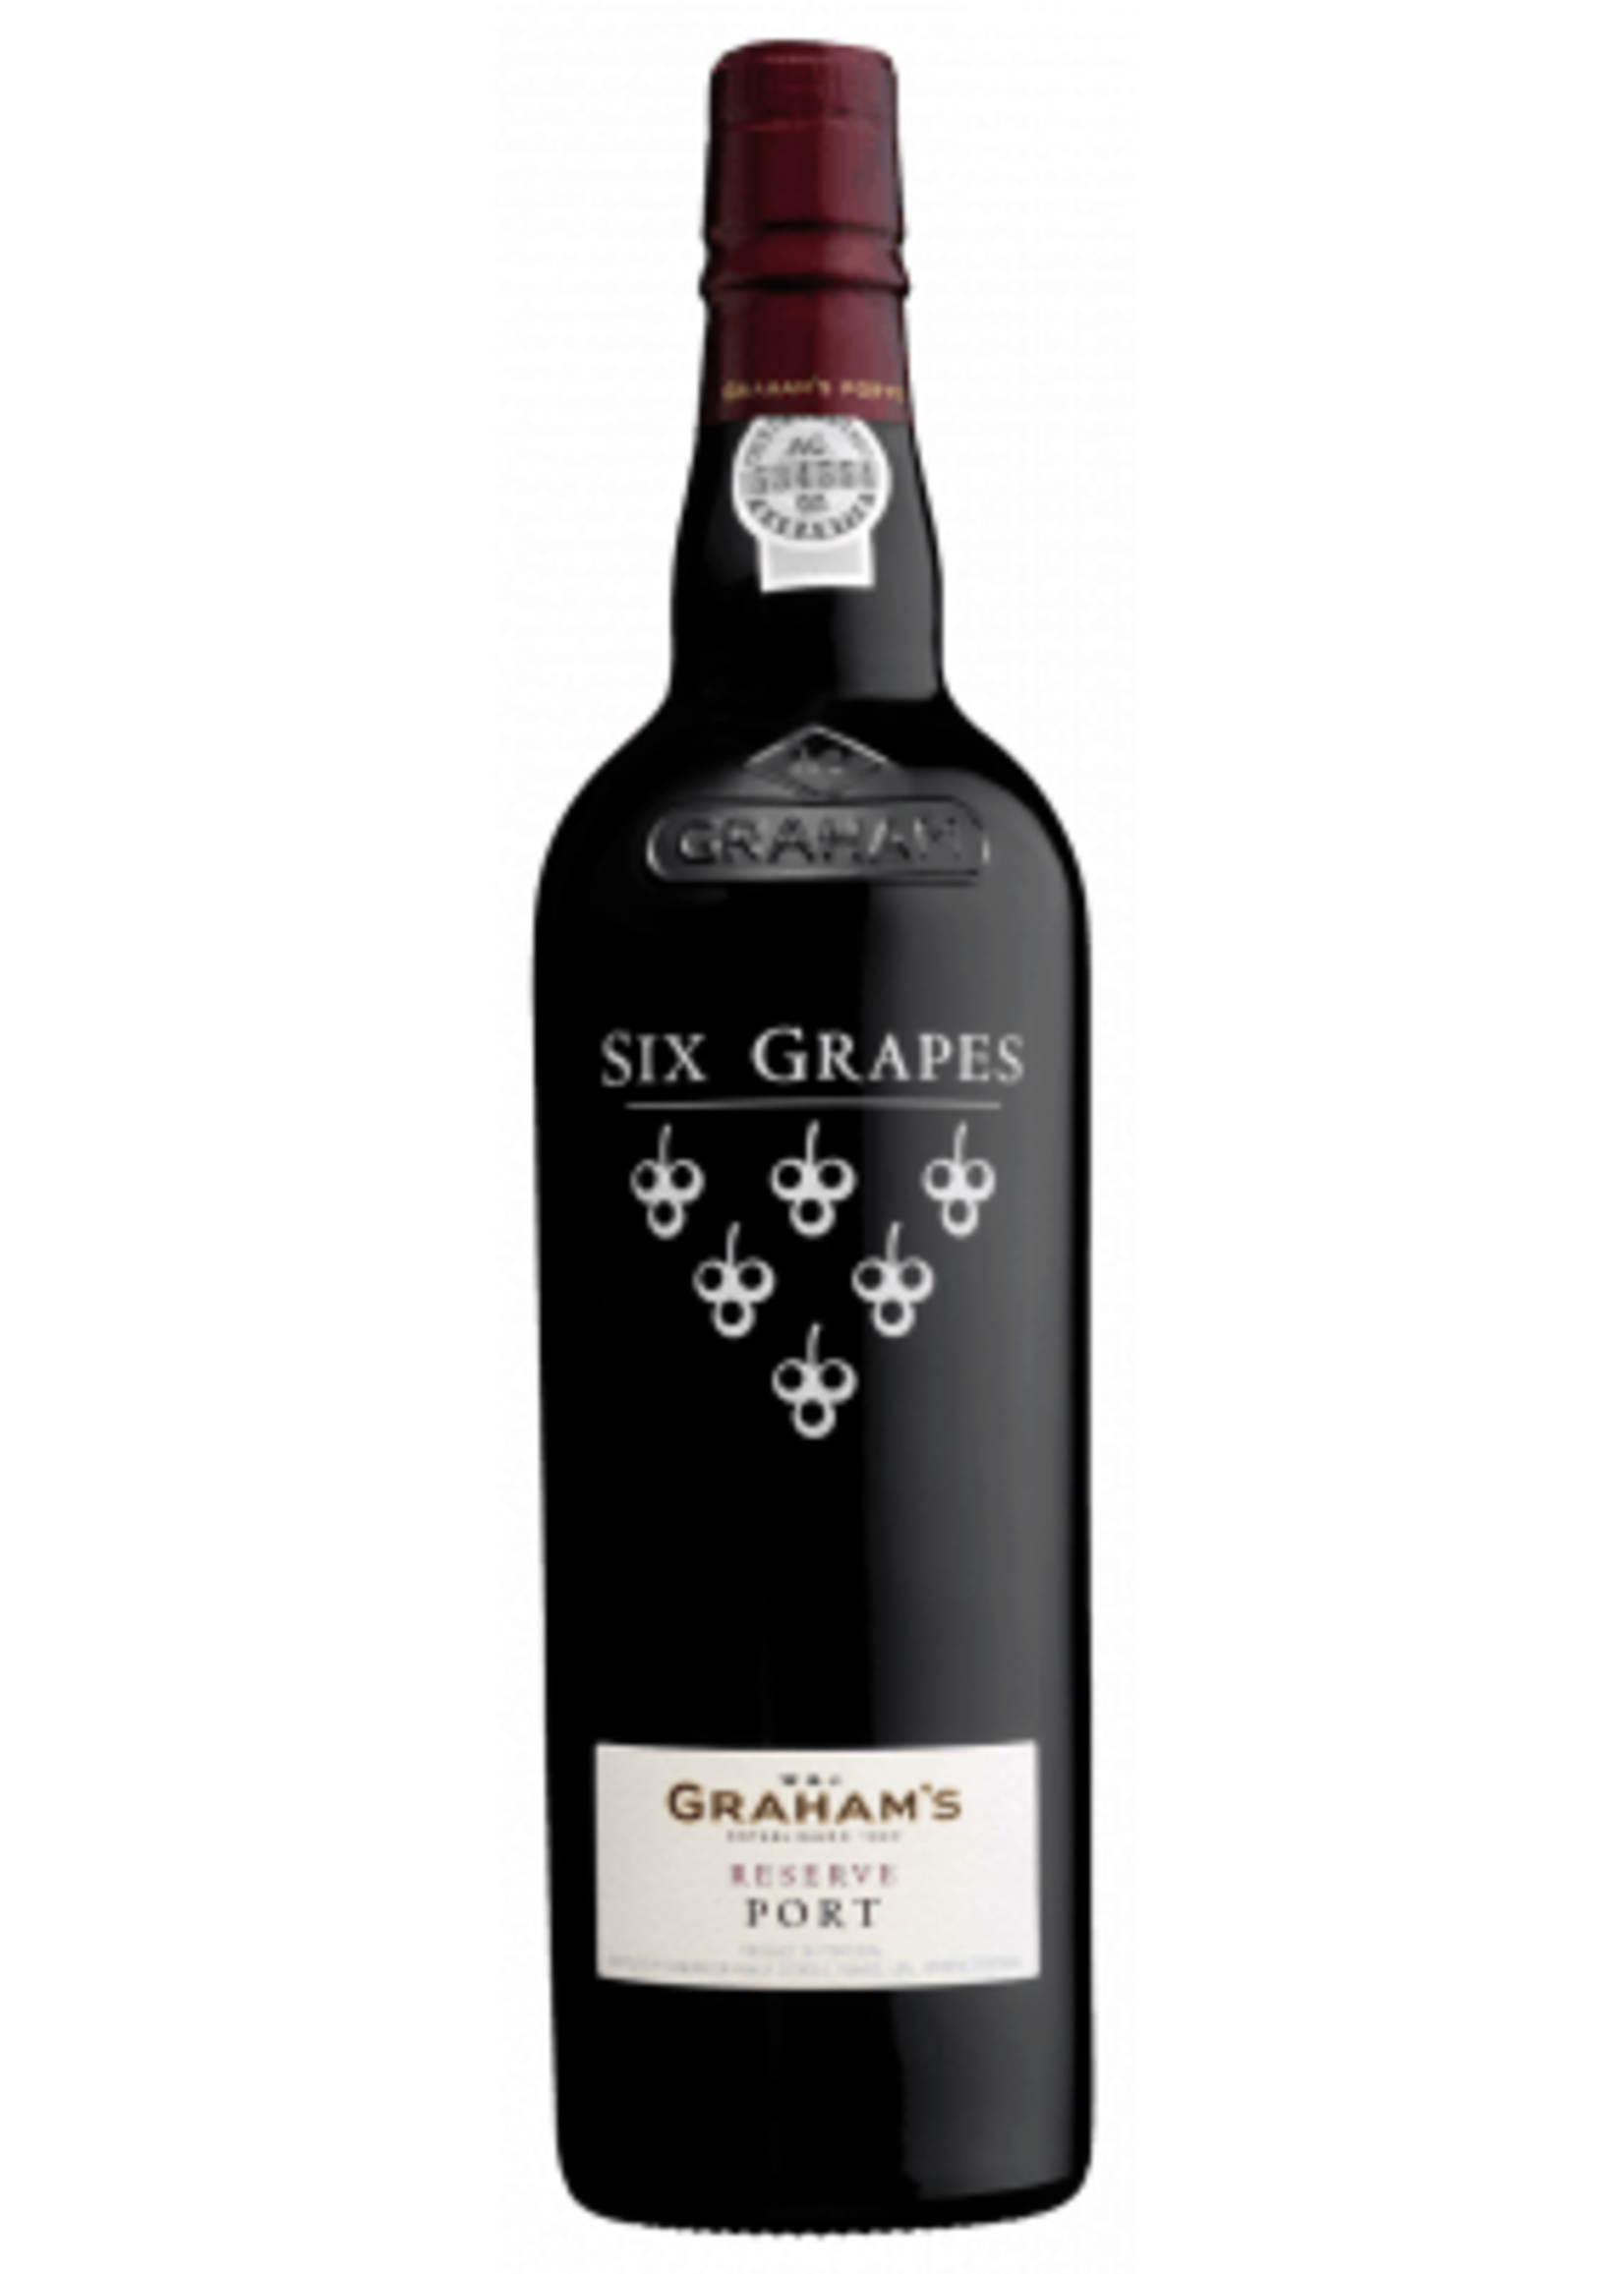 Graham Graham's Six Grapes Reserve Port